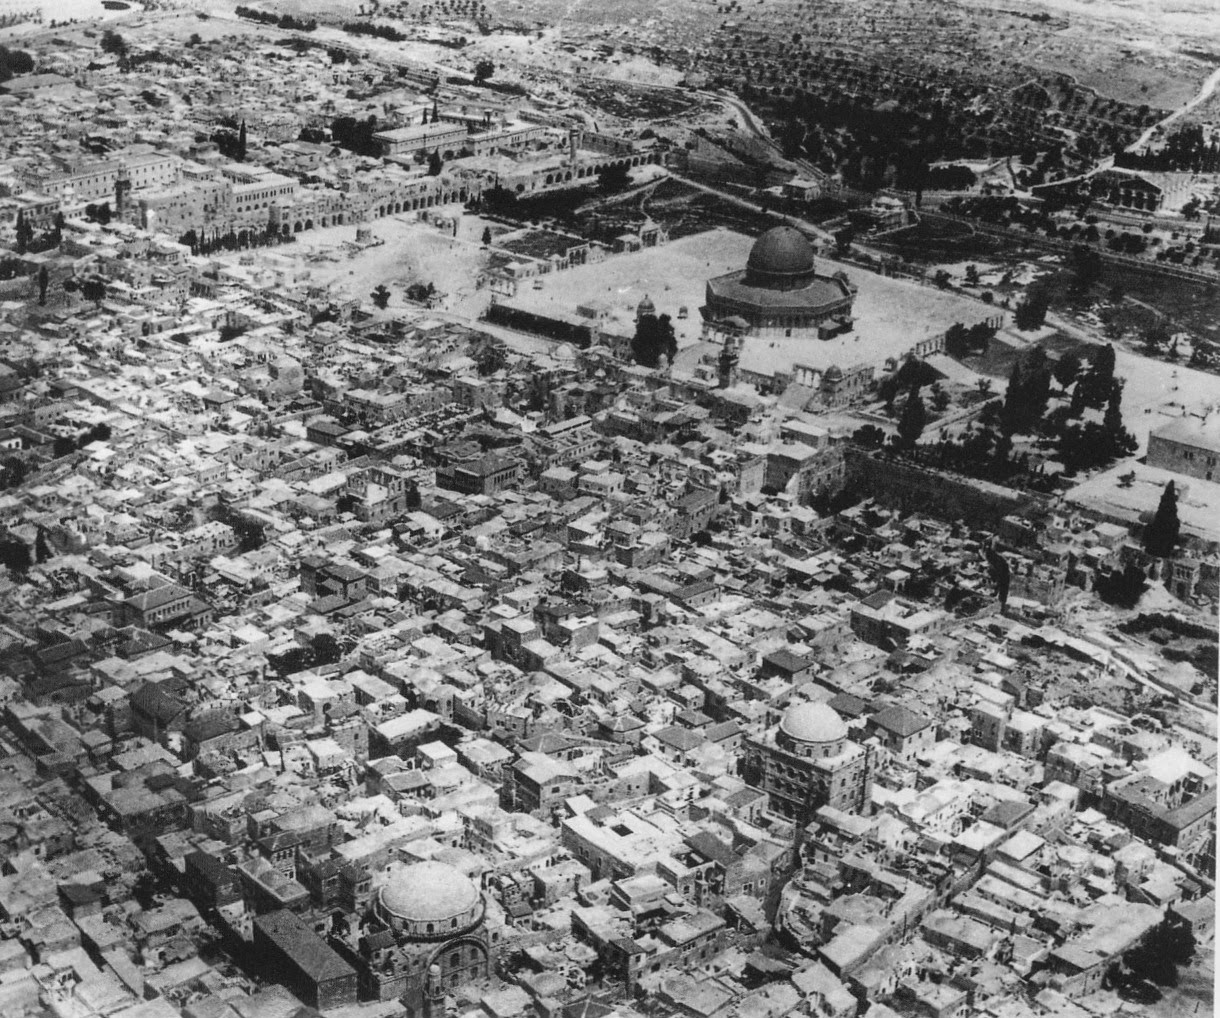 Jerusalén a finales del siglo XIX y principios del siglo XX Fotograf%C3%ADas%2Bde%2Bla%2Bantigua%2BJerusal%C3%A9n